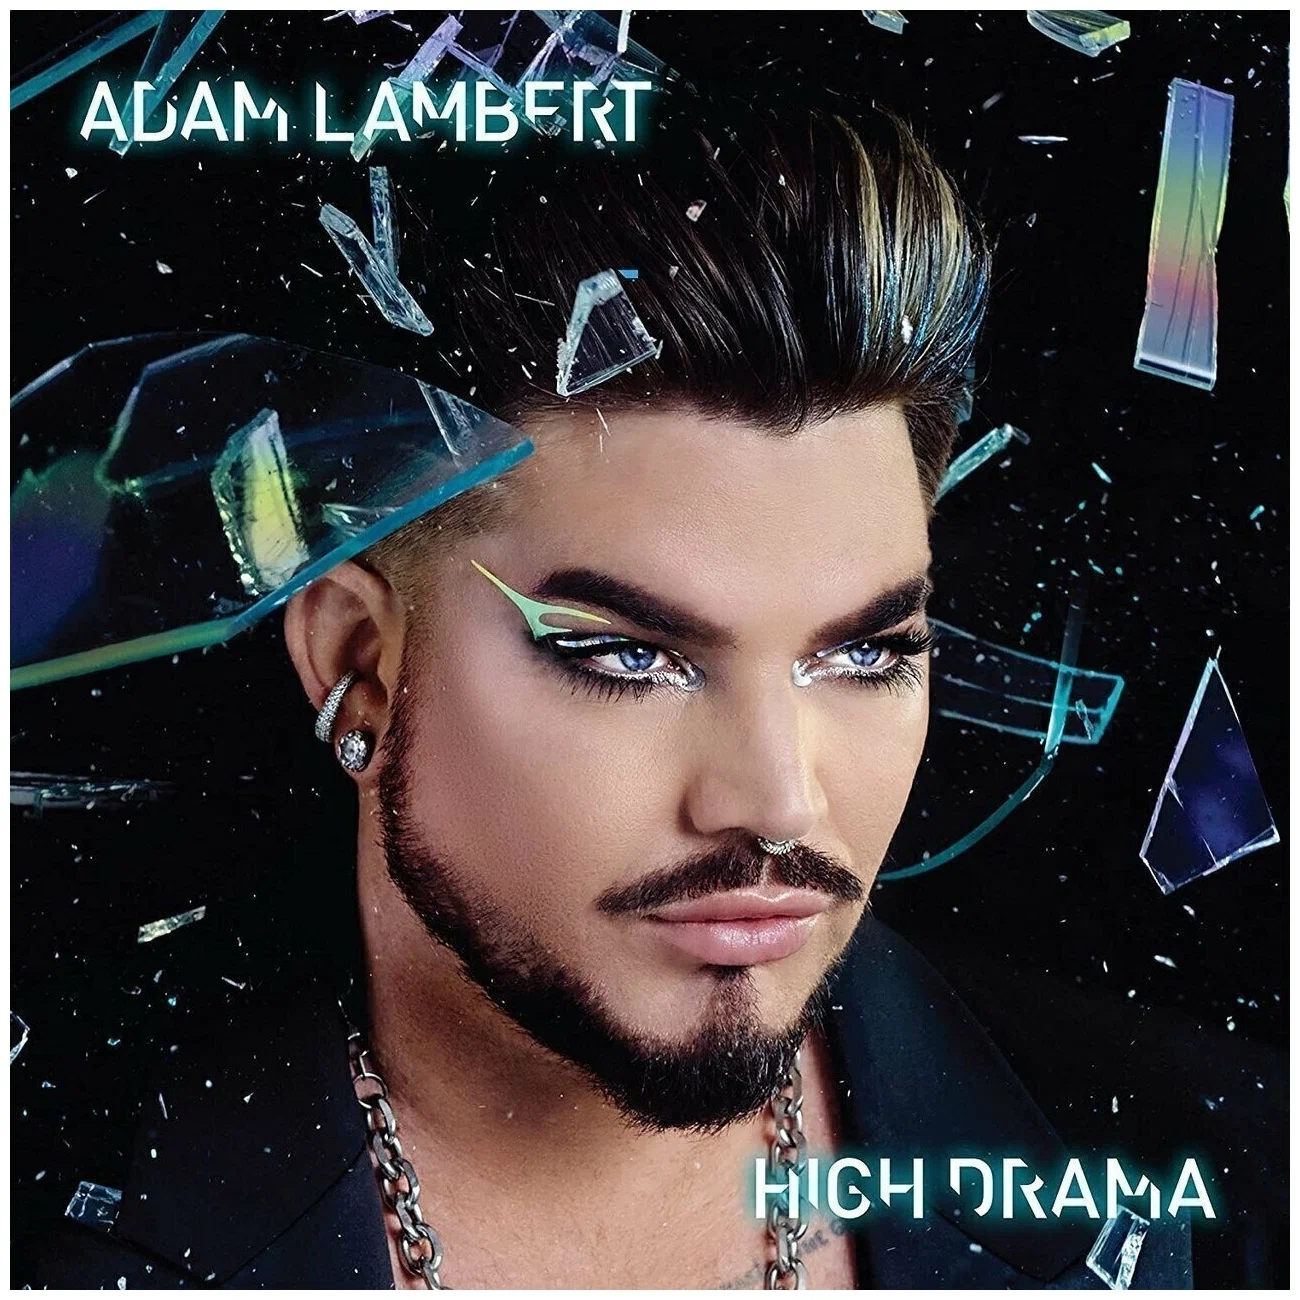 Виниловая Пластинка Lambert, Adam, High Drama (5054197308611) виниловая пластинка adam lambert high drama lp